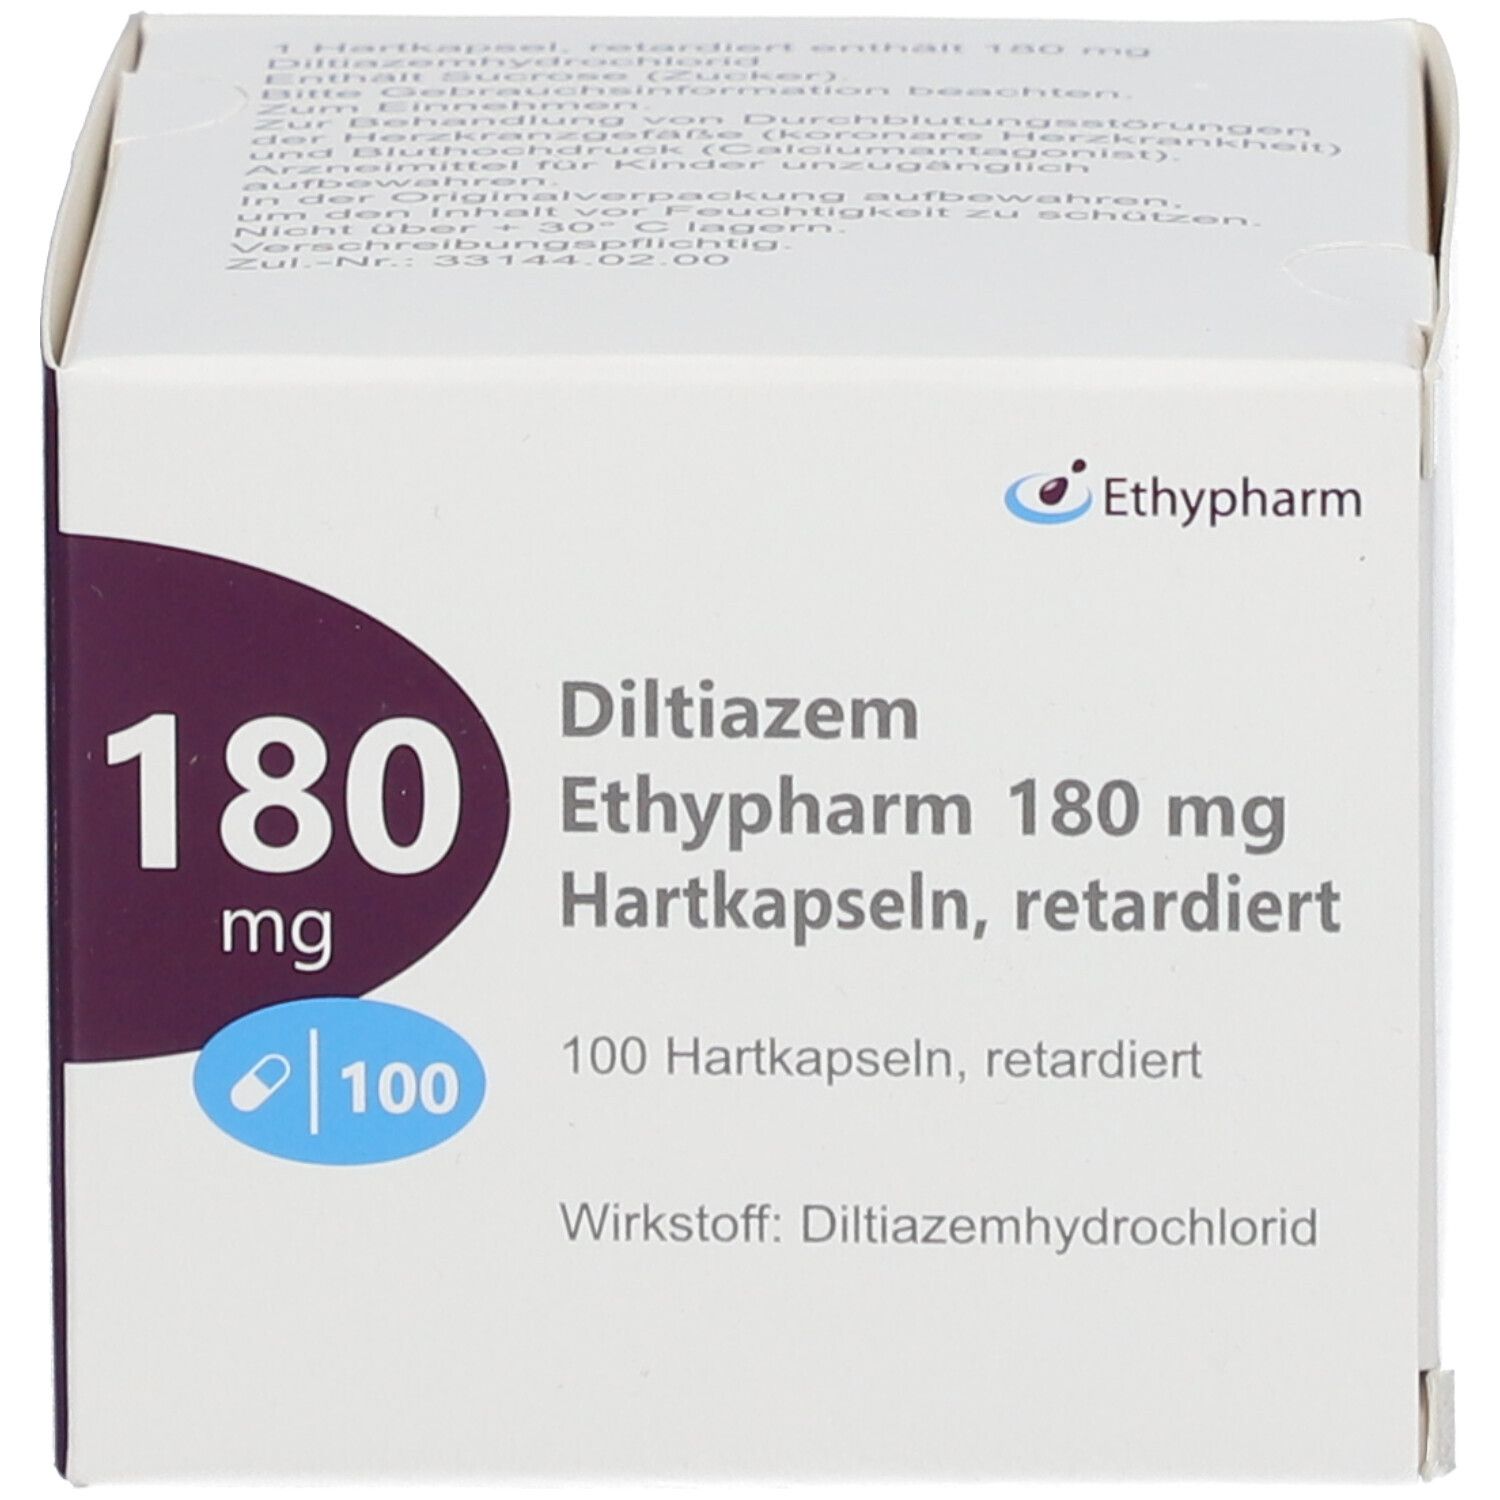 Diltiazem Ethypharm 180 mg